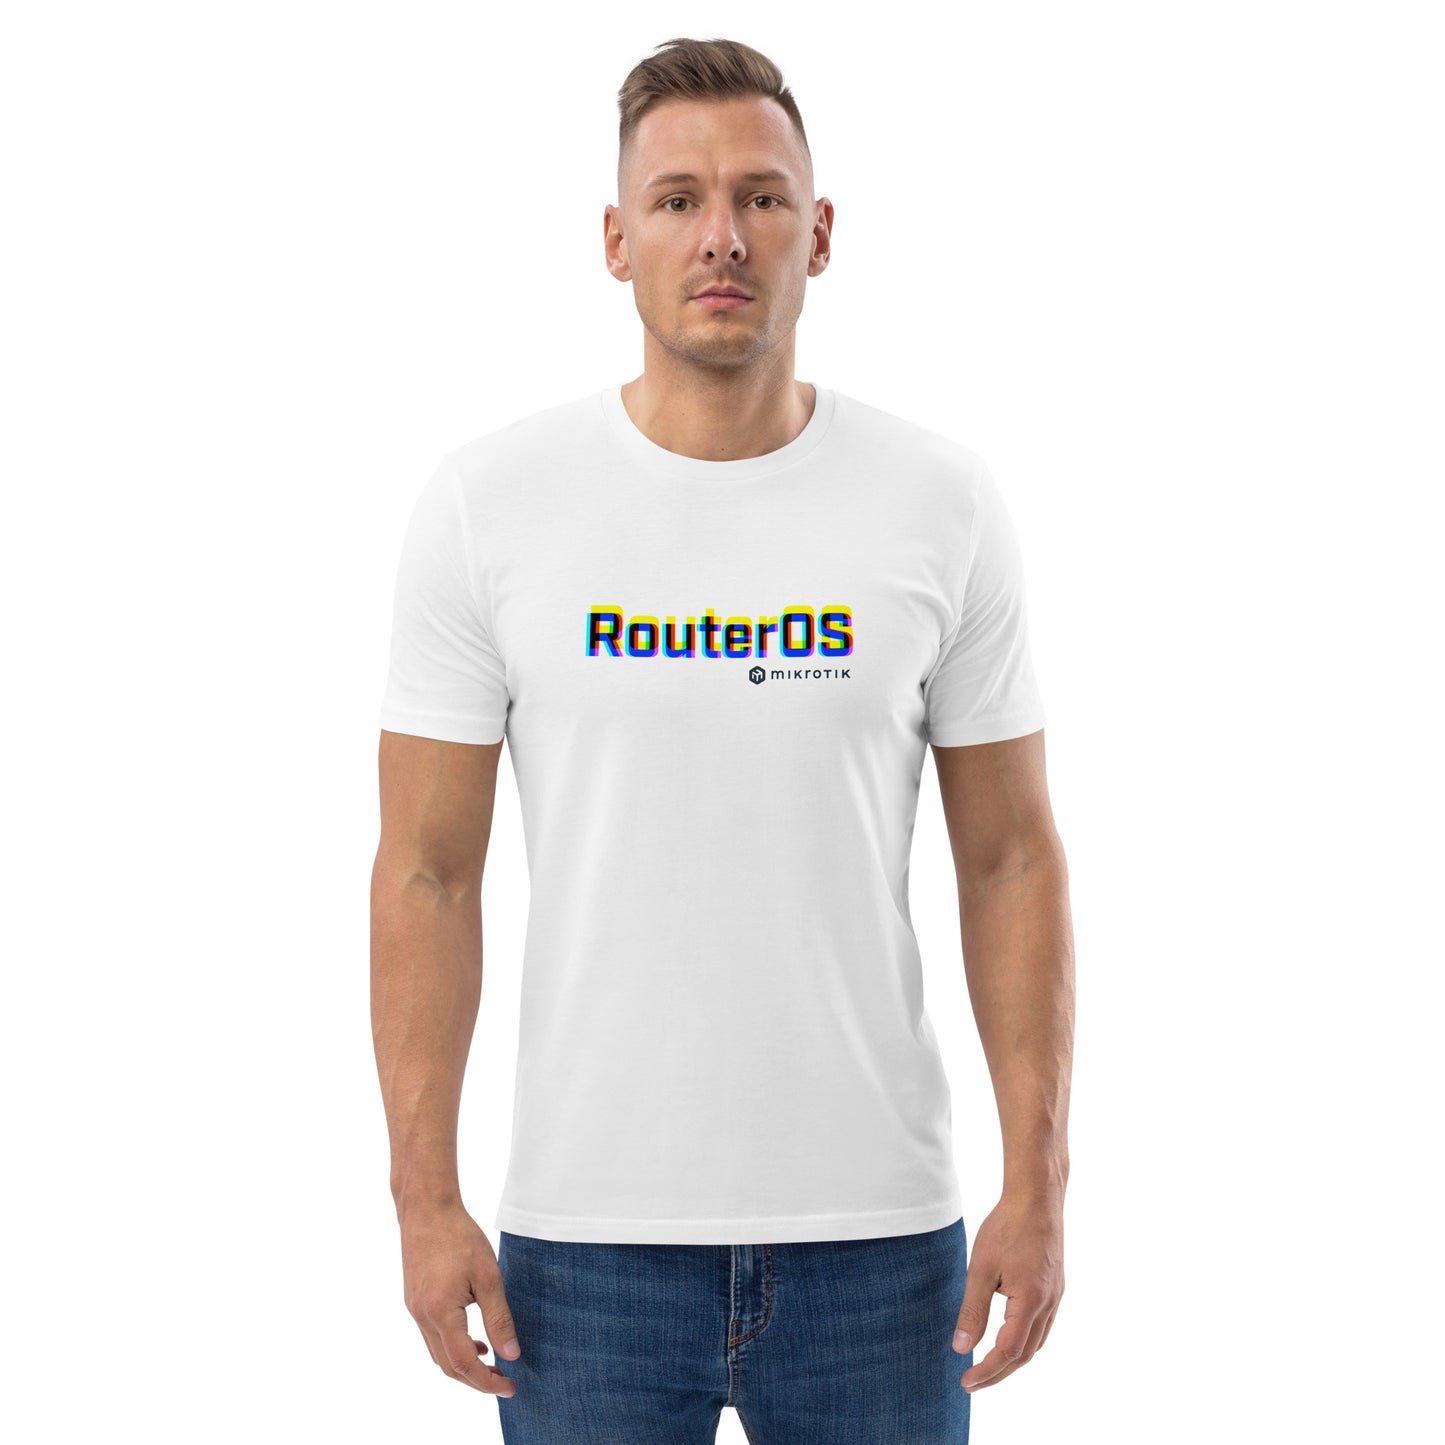 RouterOS on organic cotton t-shirt